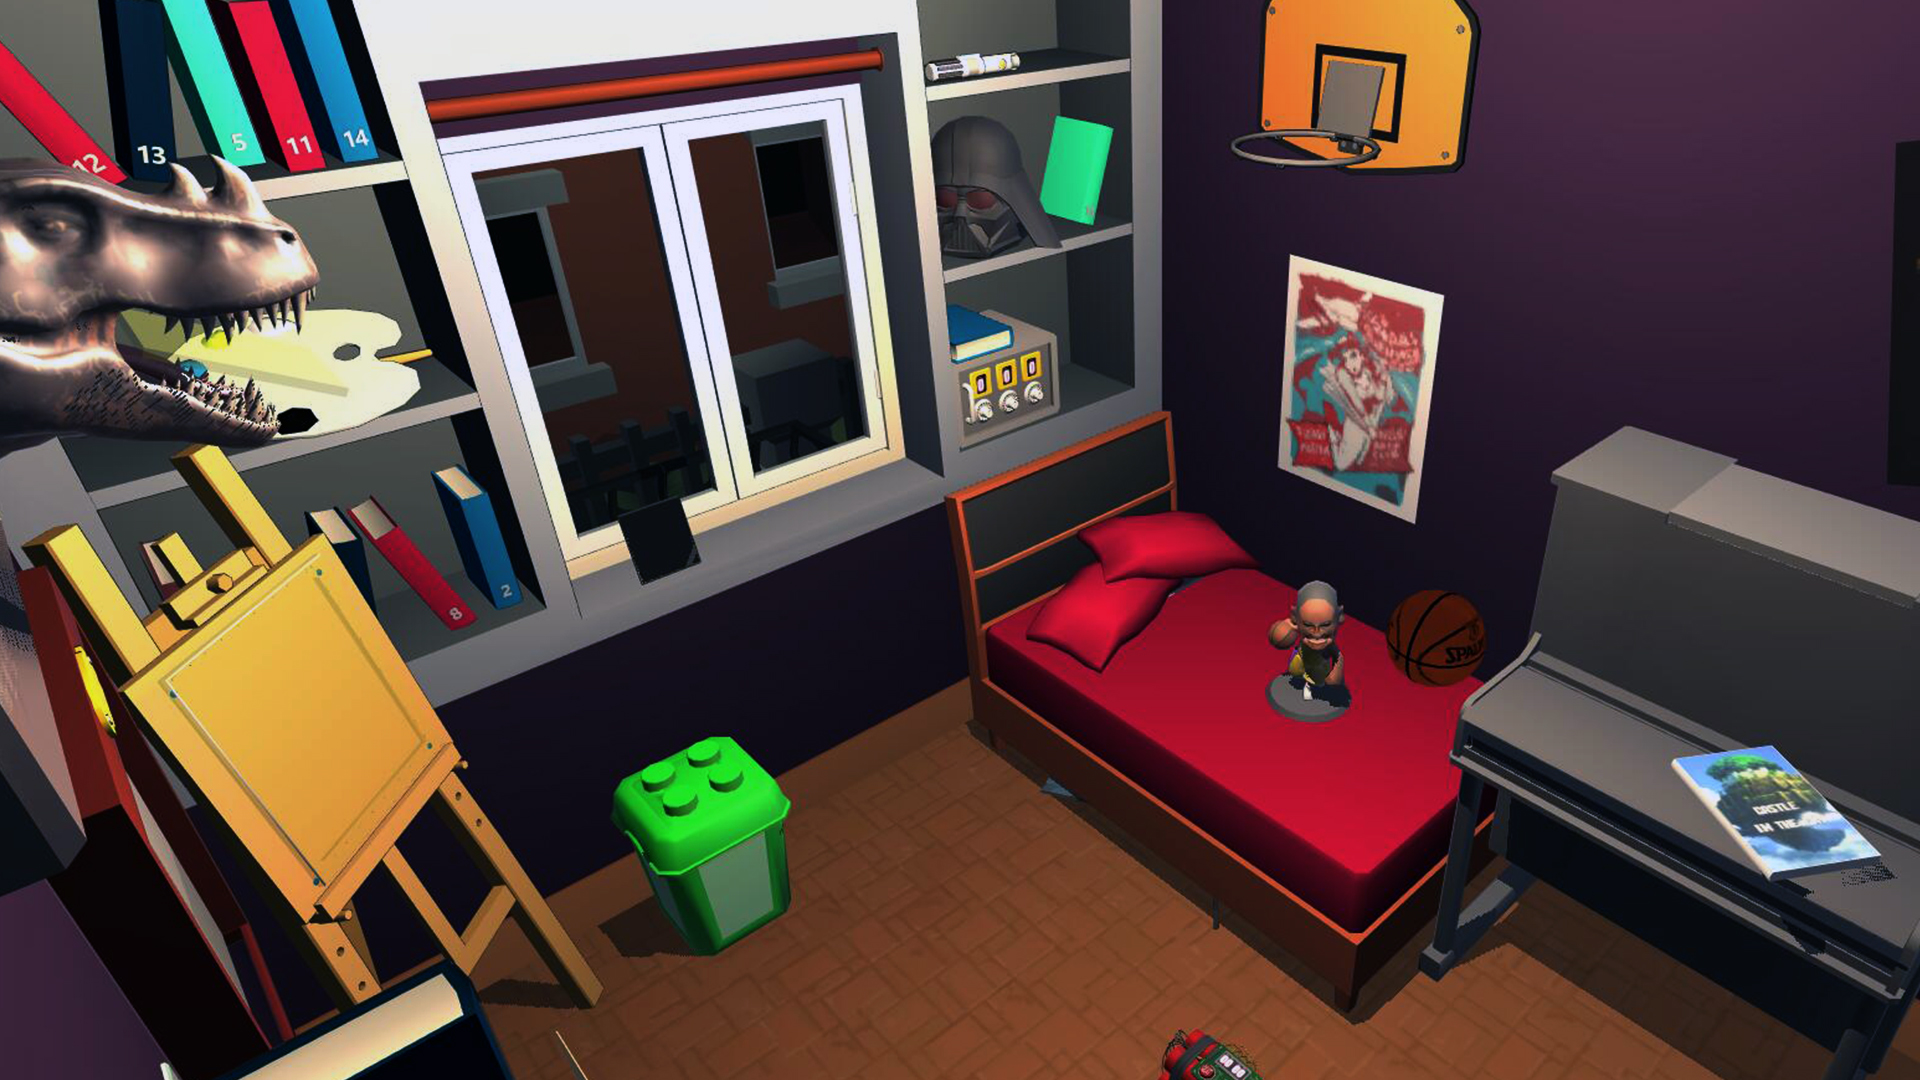 The Puzzle Room VR ( Escape The Room ) no Steam